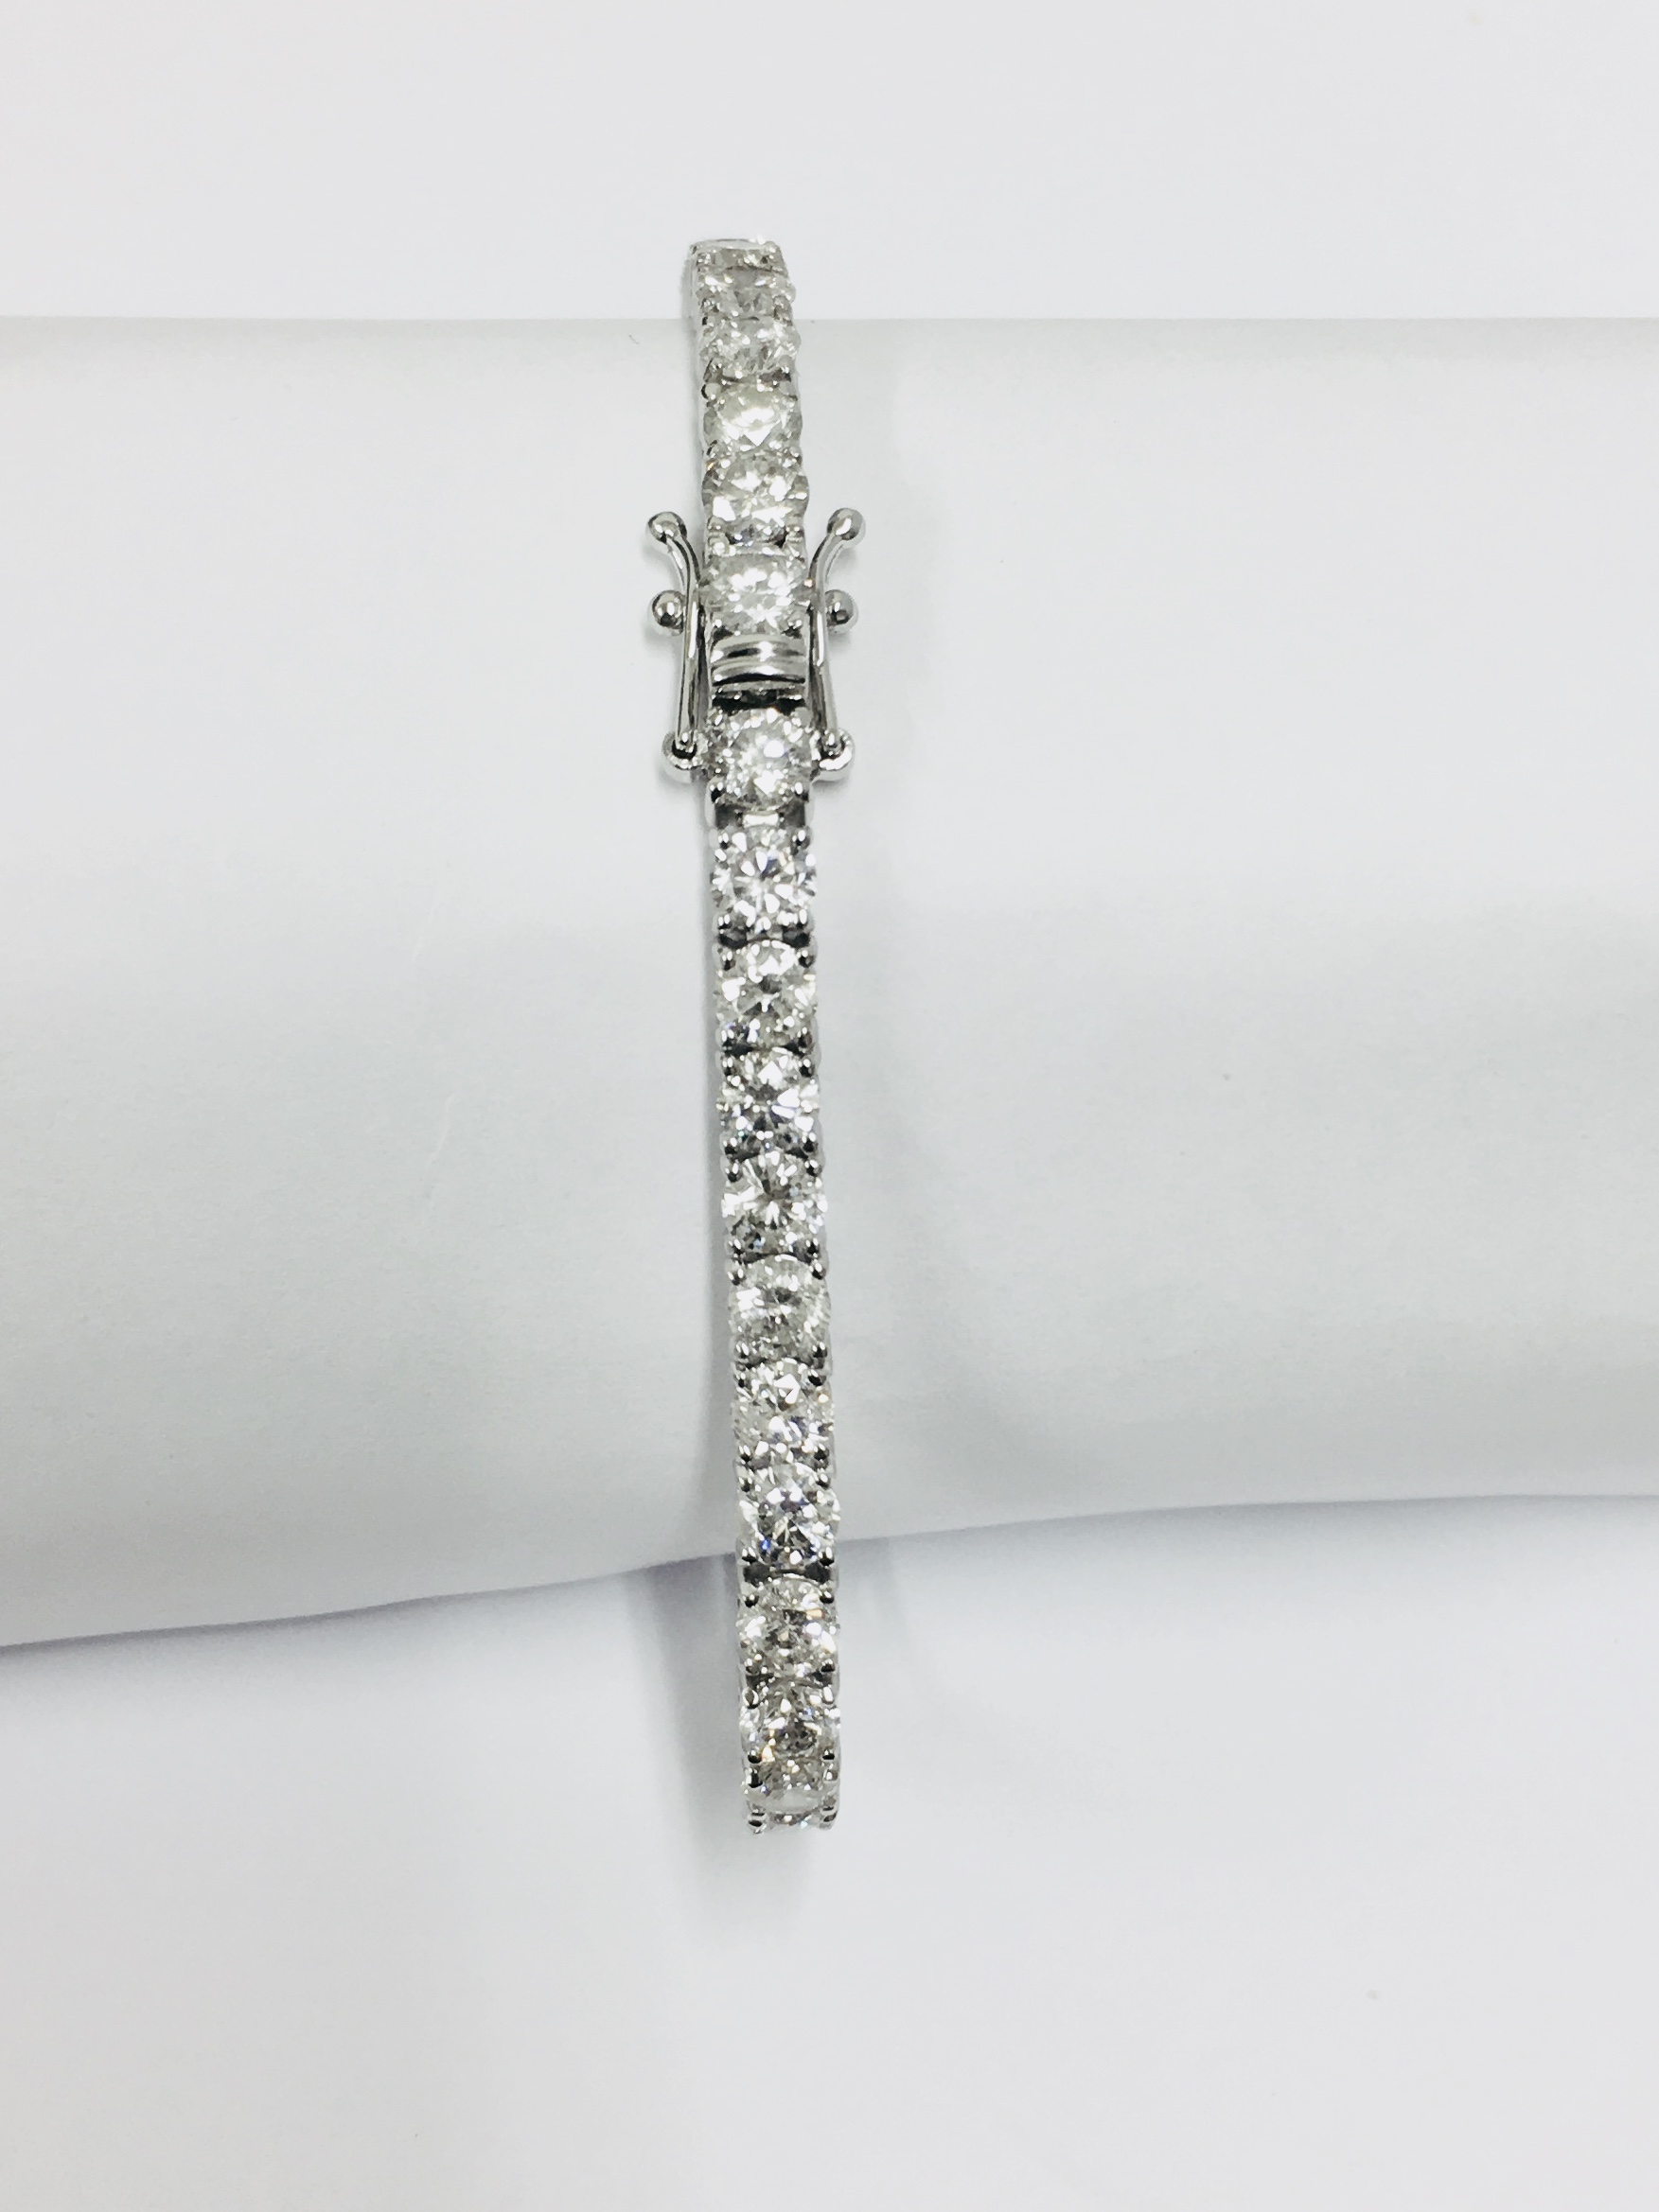 8.00ct Diamond tennis bracelet set with brilliant cut diamonds of G colour - Image 4 of 42